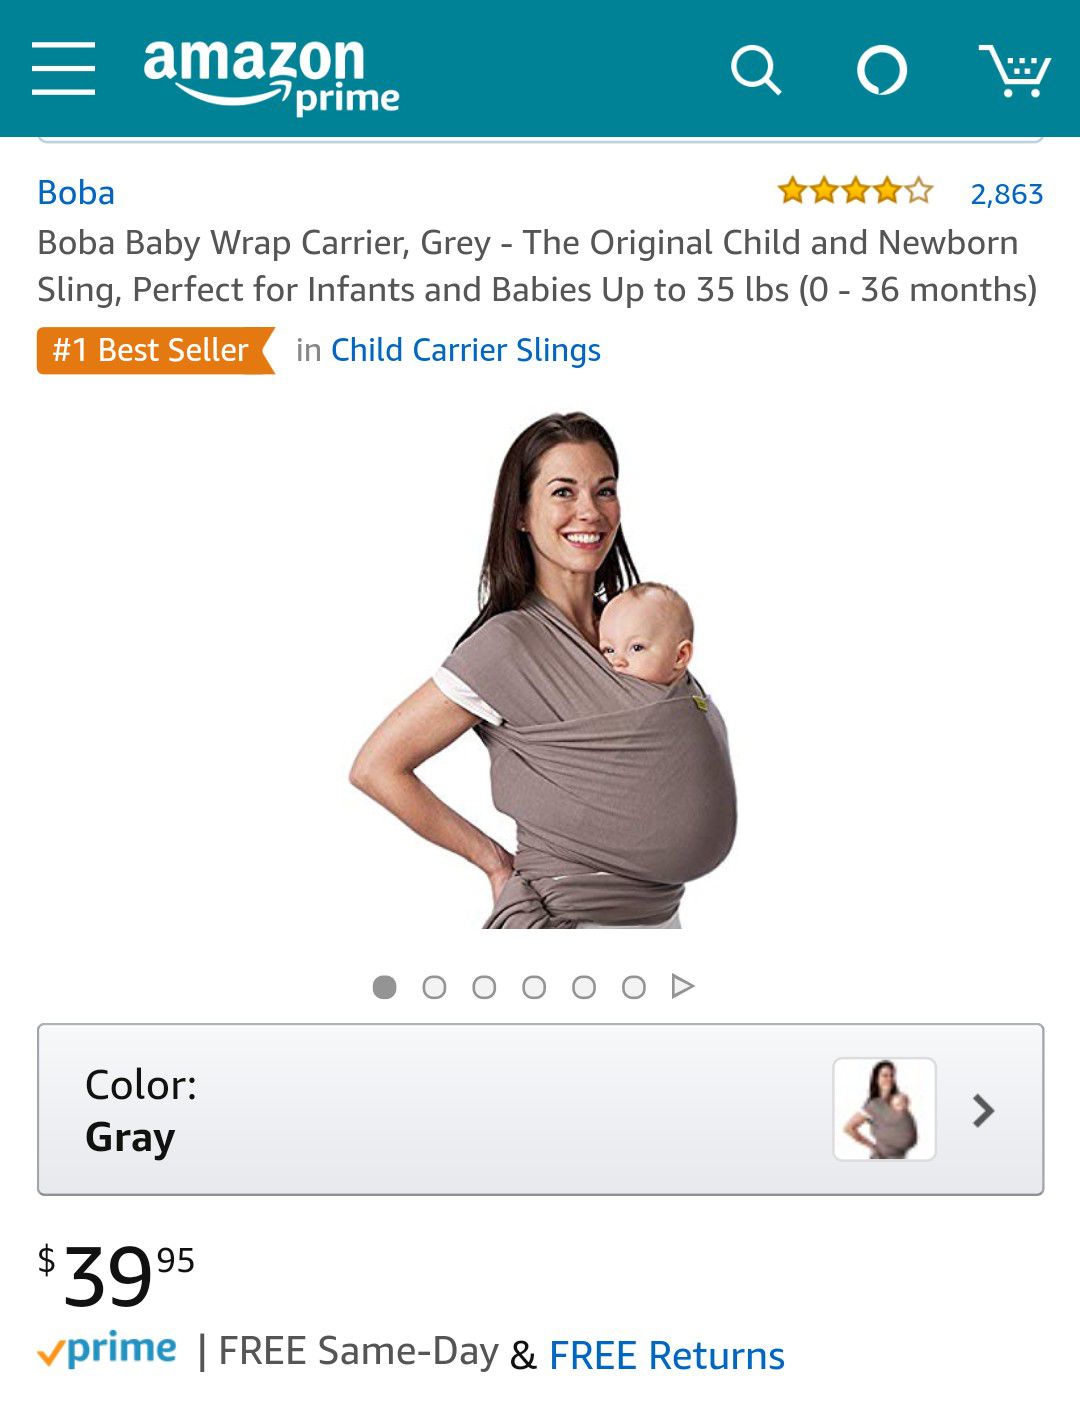 Boba baby wrap carrier - grey